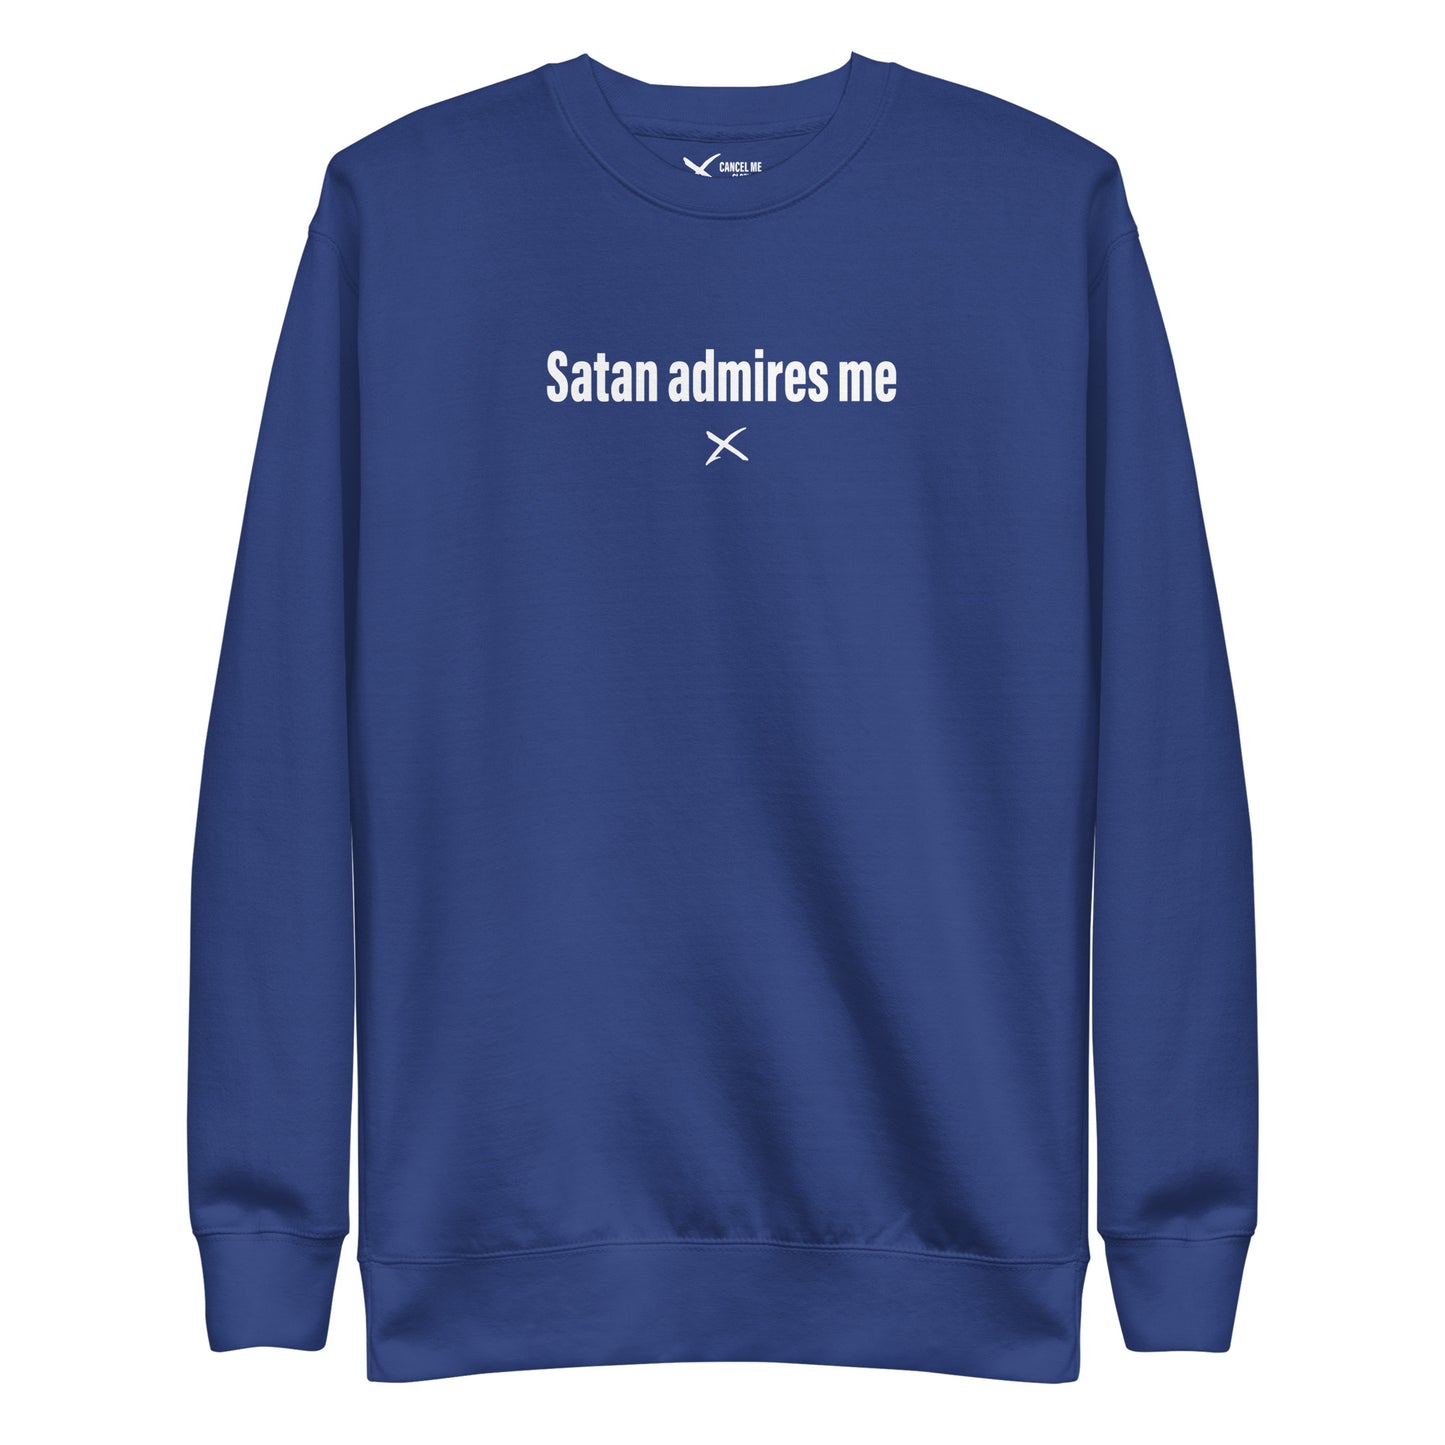 Satan admires me - Sweatshirt